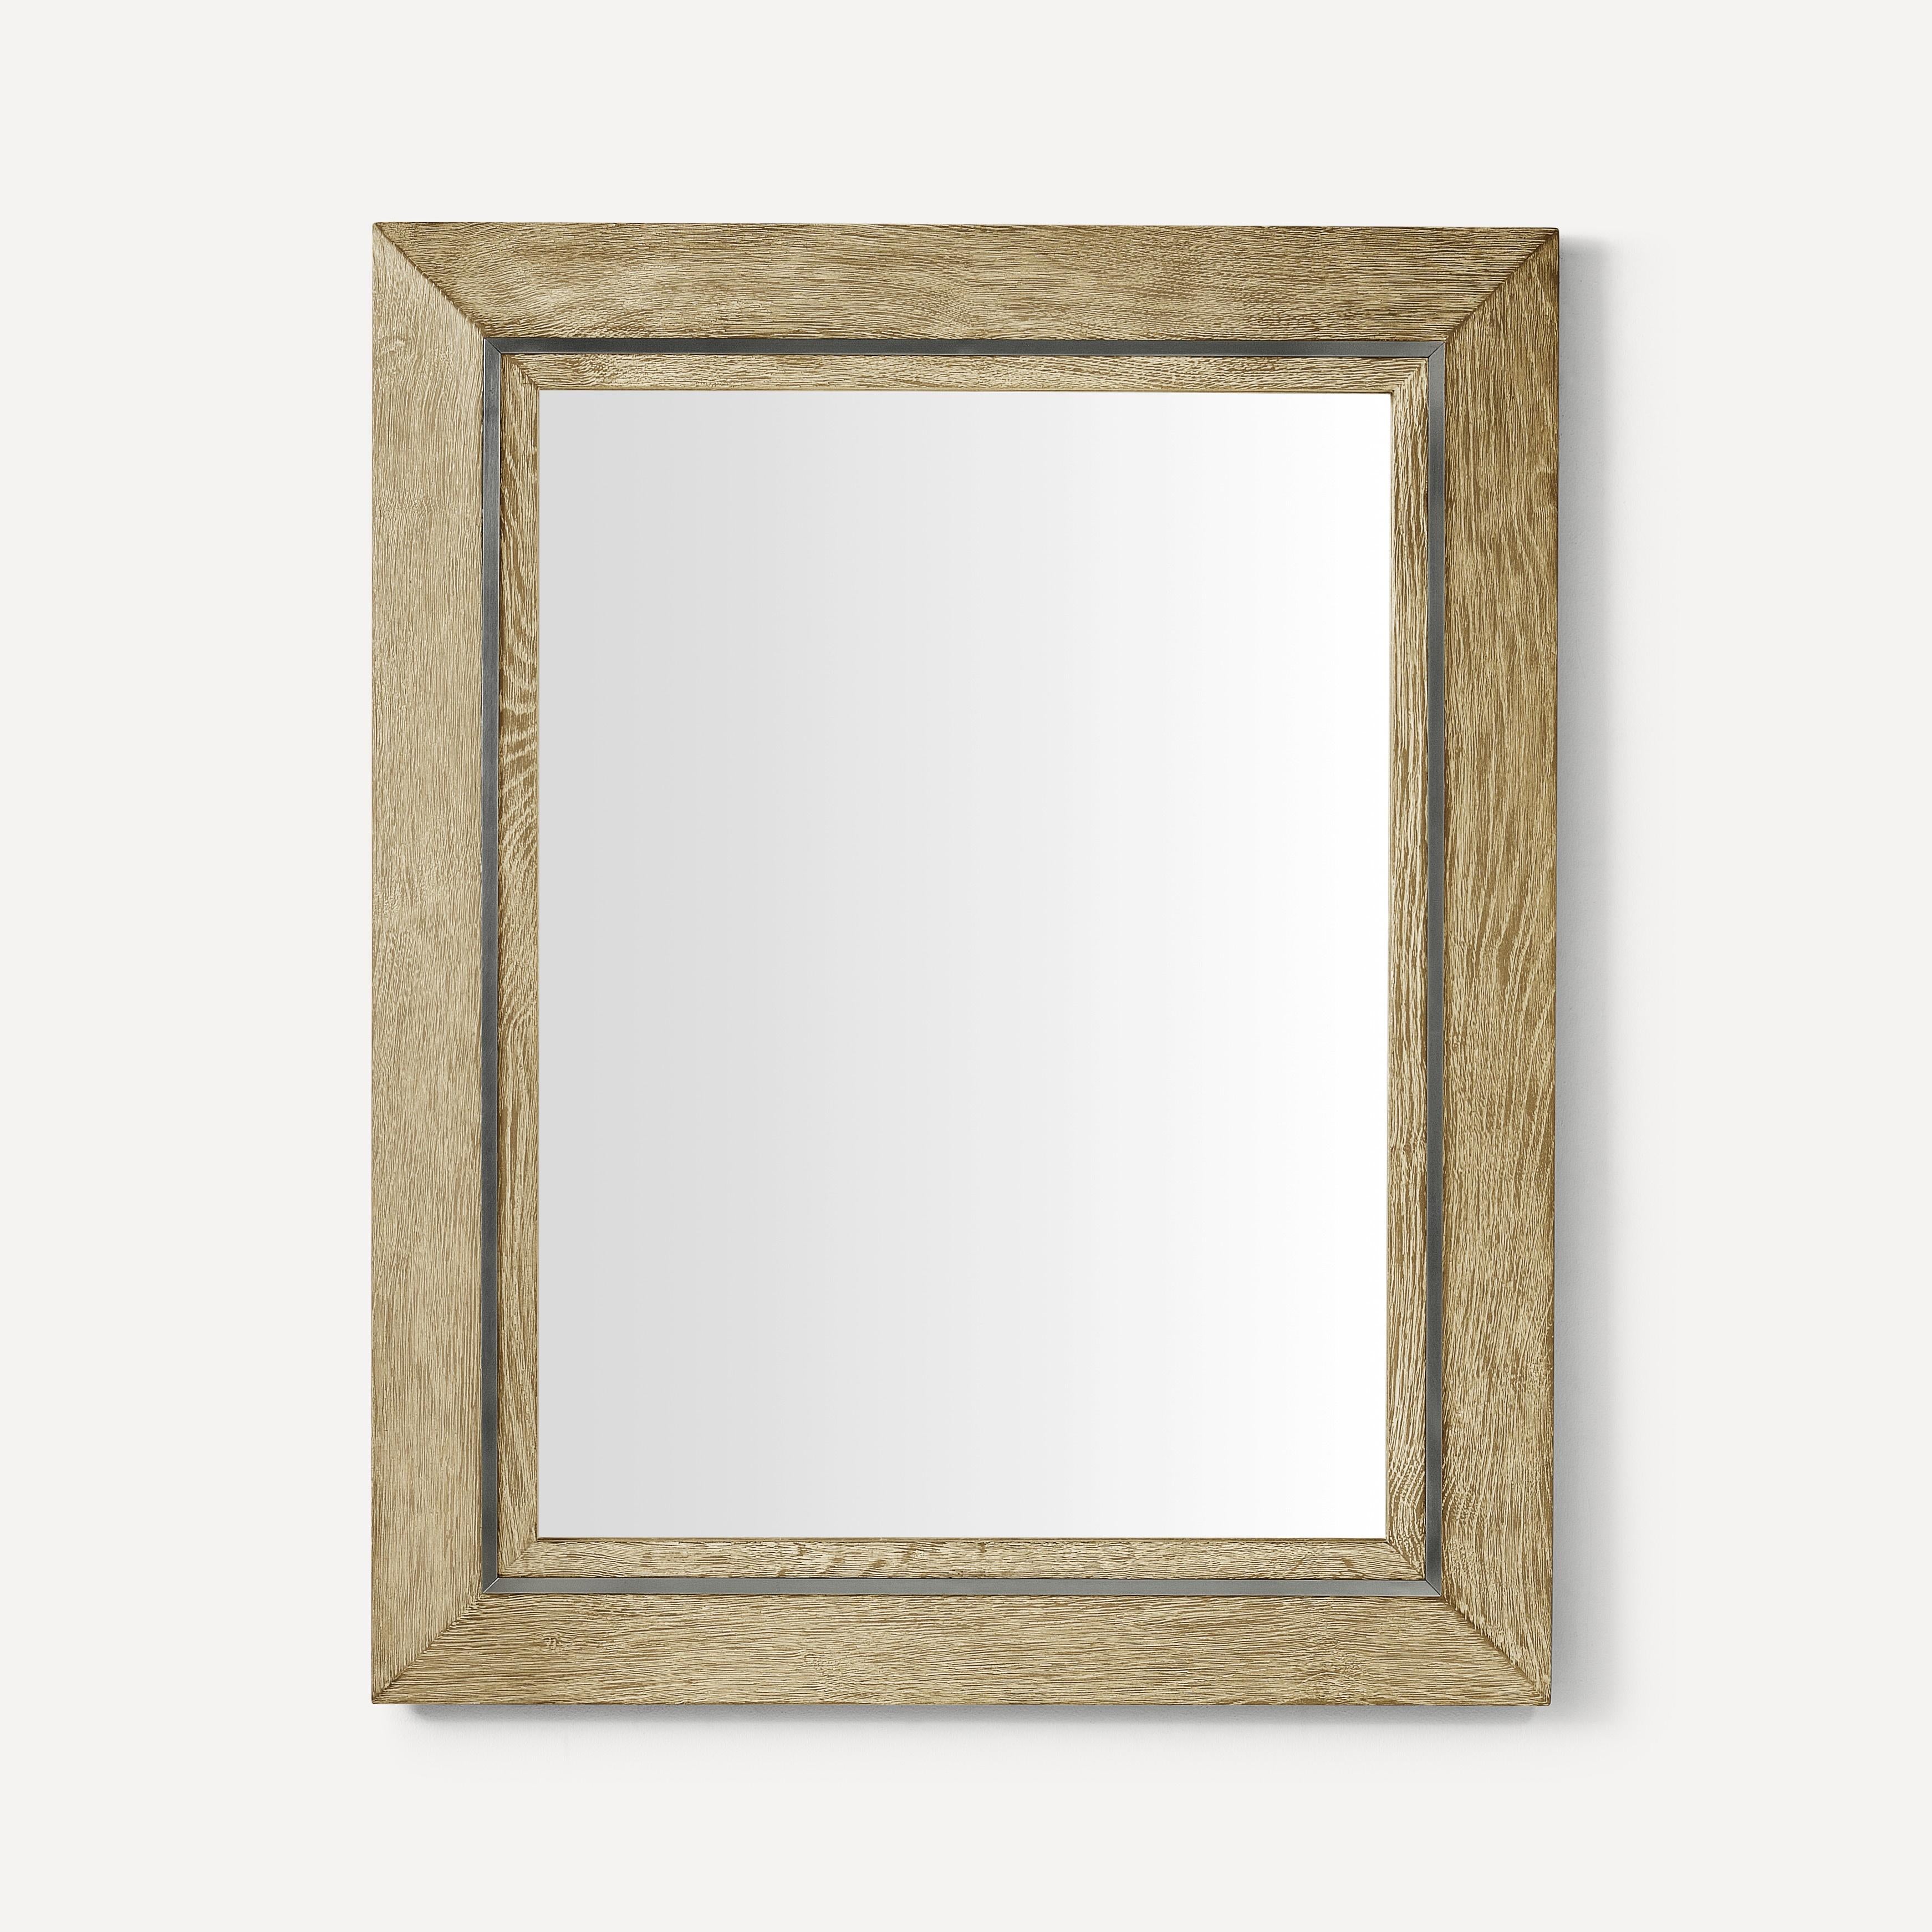 Robern Wood Mirror with Metal Inlay, 24"x 30"x 1-1/2"